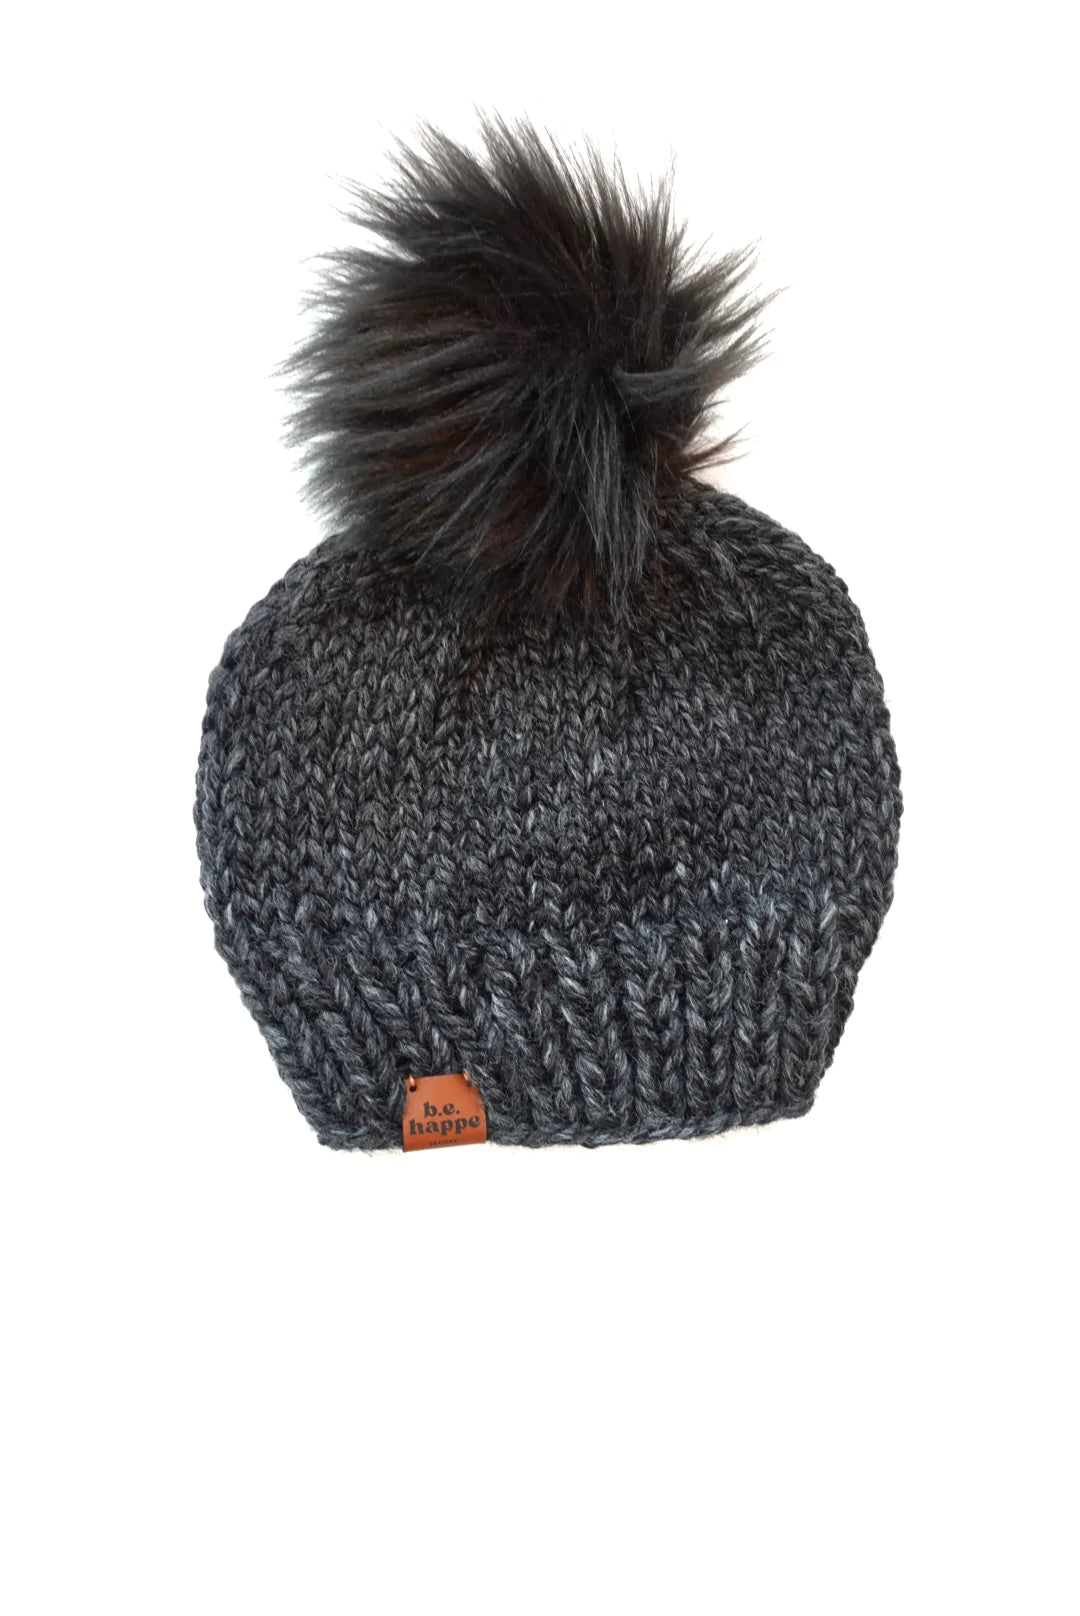 B.E. Happe Solid Knit Hat - Charcoal